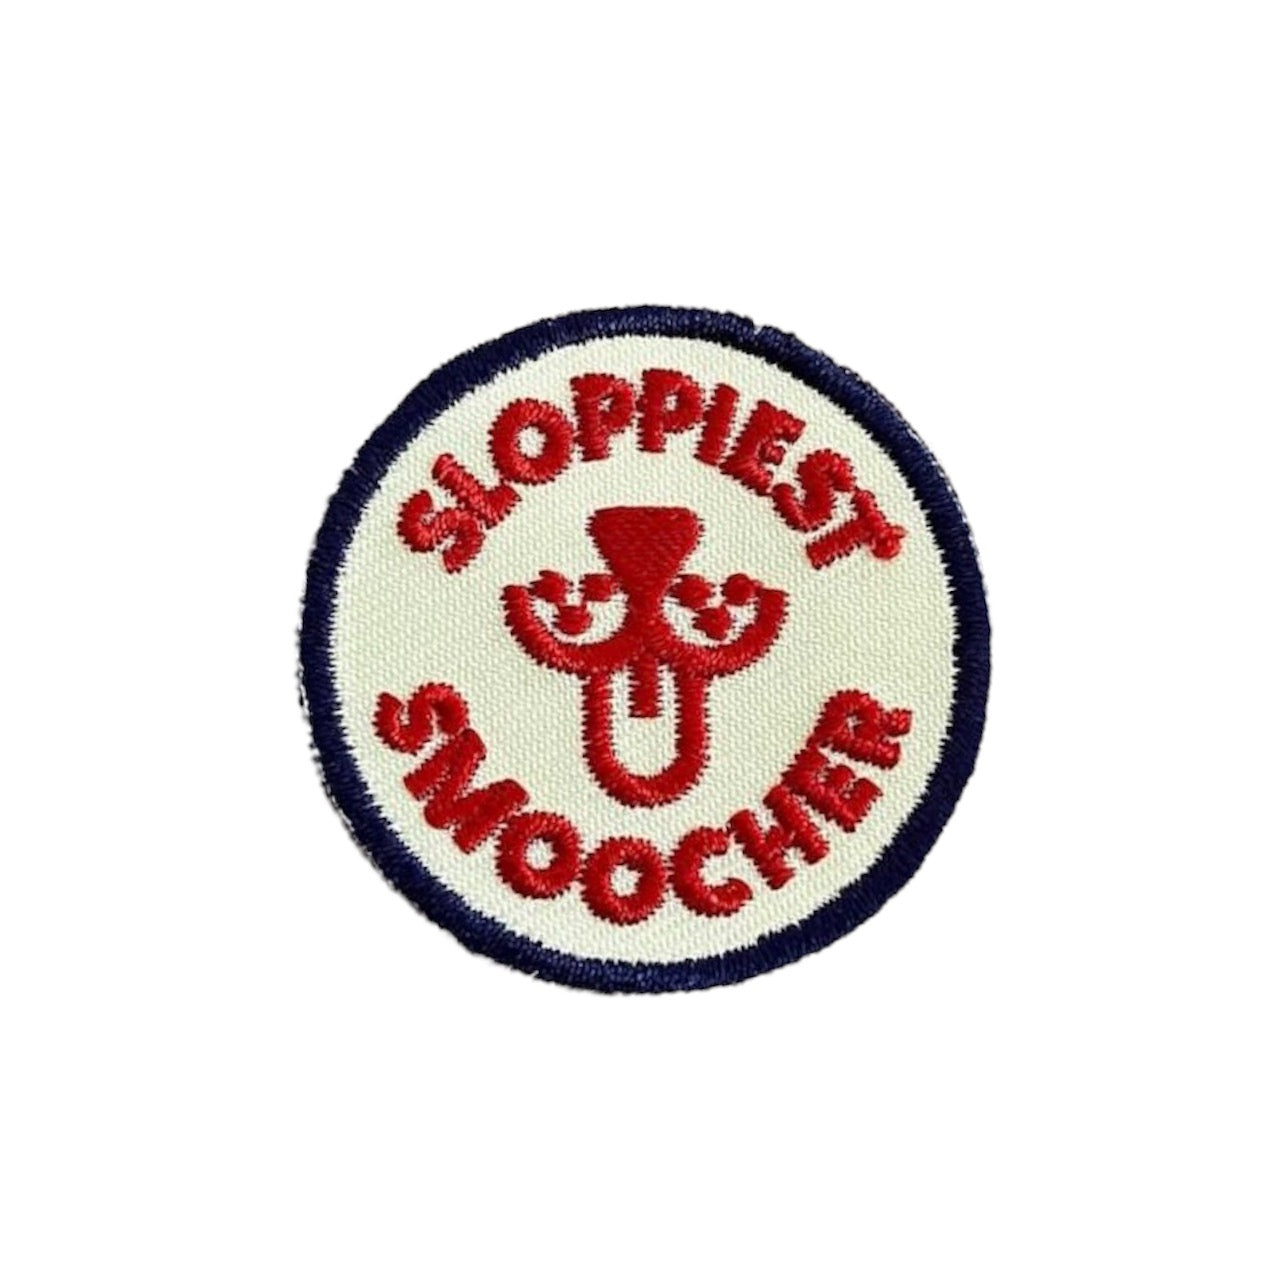 Sloppiest Smoocher Badge